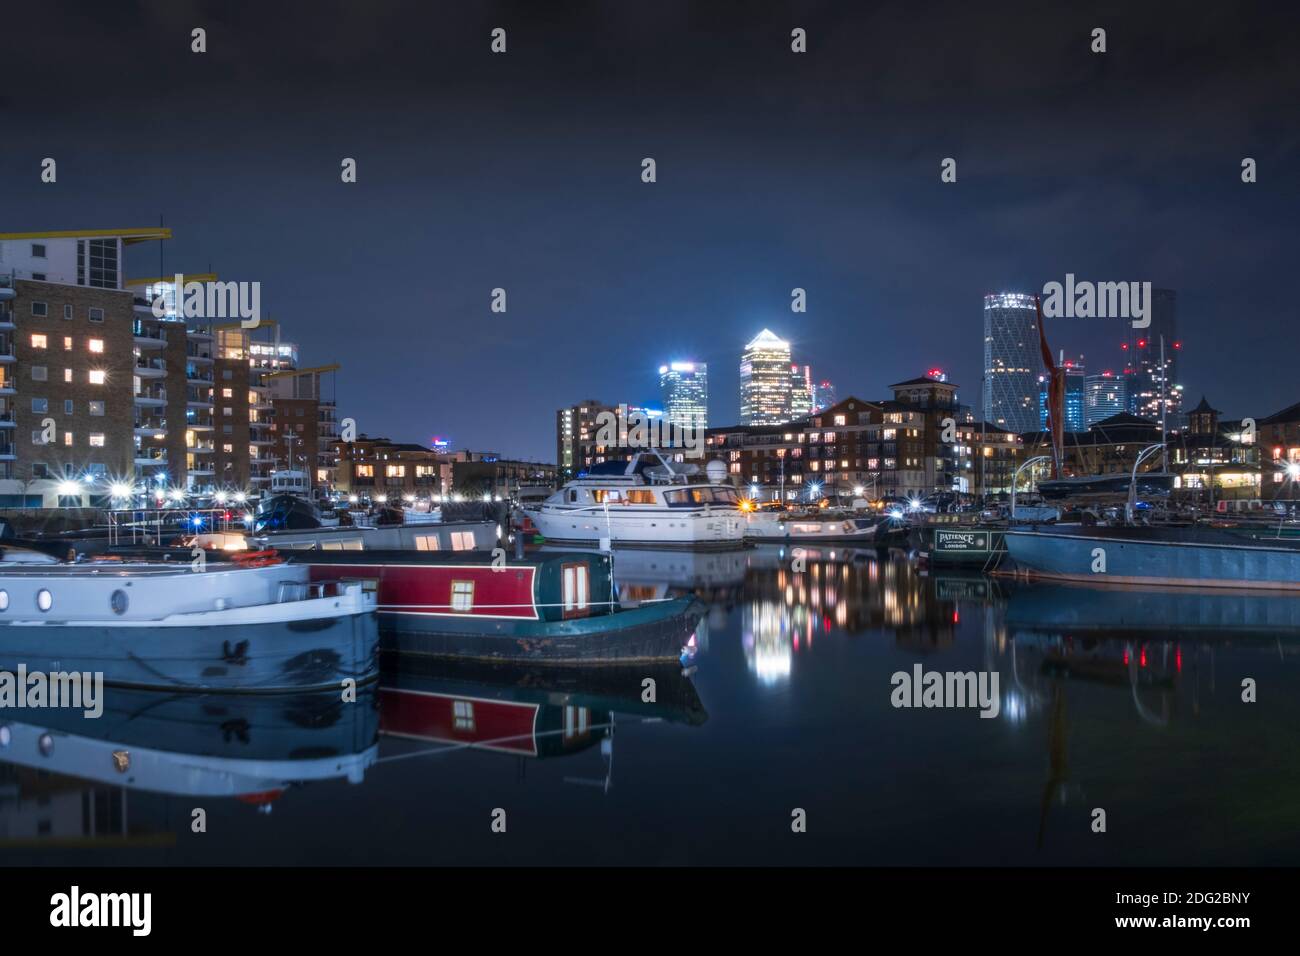 London, Tower Hamlets, Limehouse, Limehouse Basin waterside & marina, houseboats, illuminated skyline of the docklands financial district, night shot Stock Photo